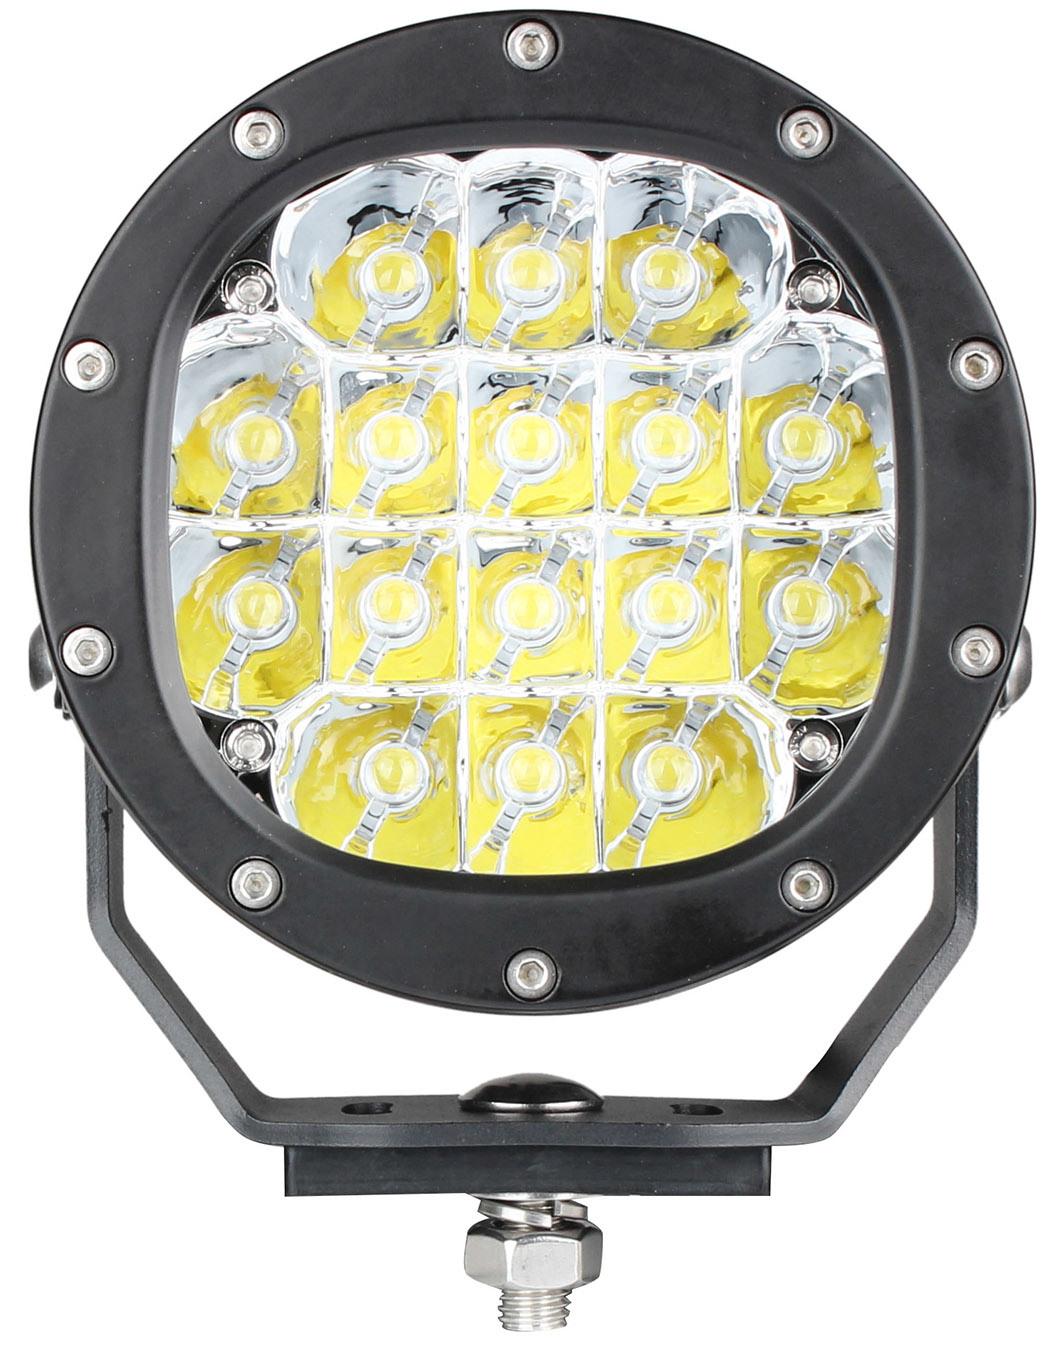 Lmusonu New Model 3480 LED Driving Light Latticepower 5.0 Inch 80W 6200lm for Offroad Truck Car